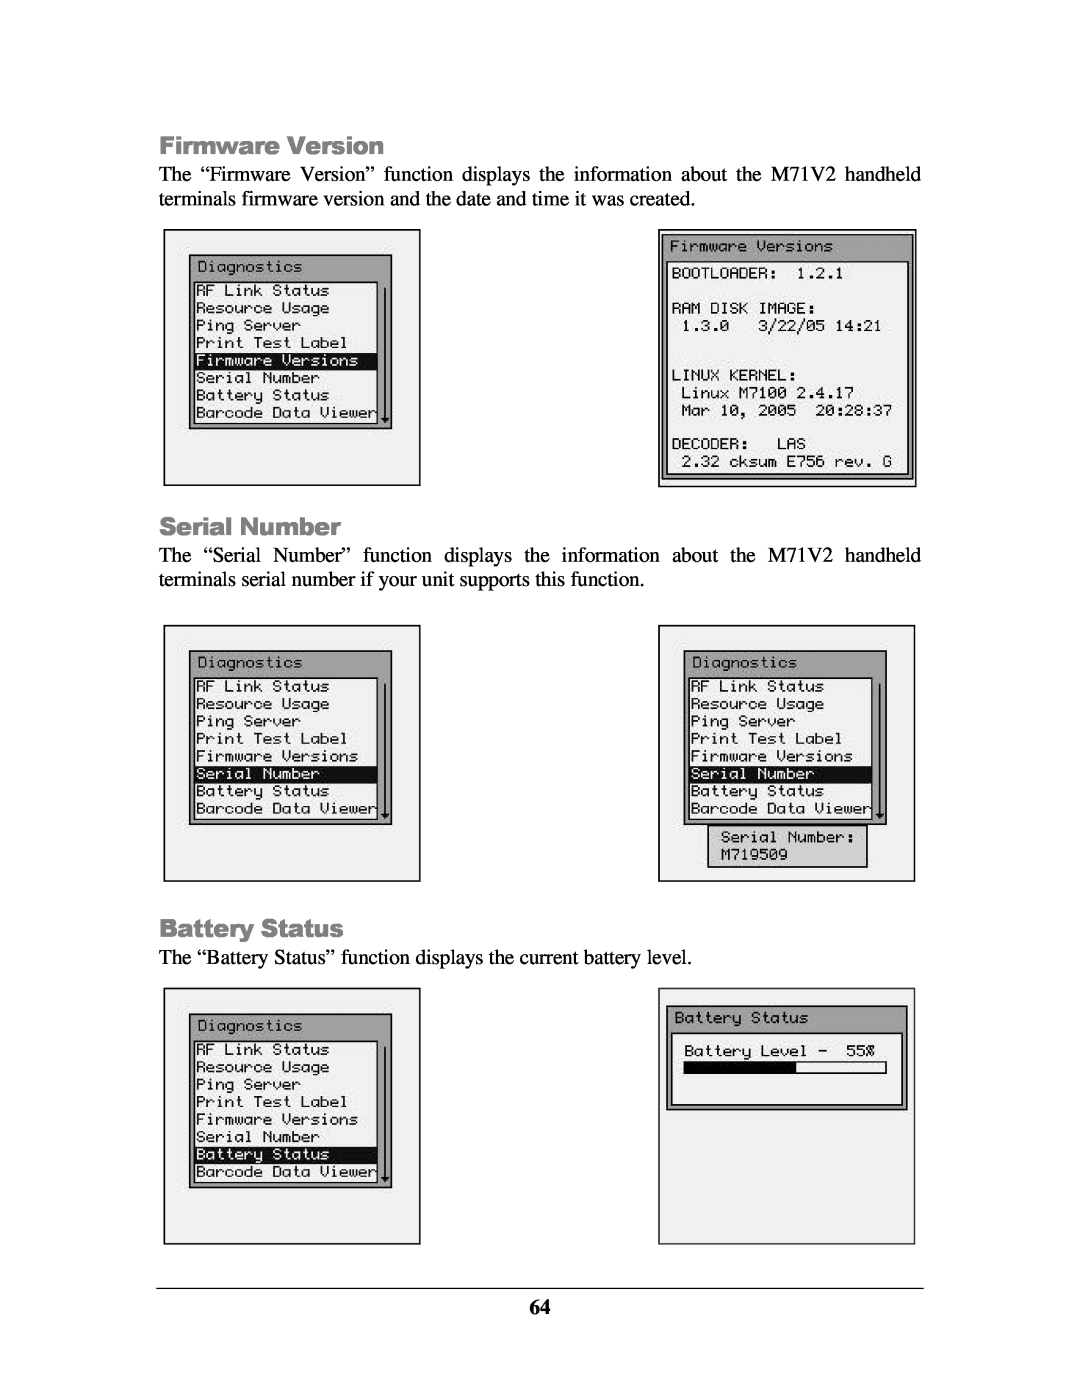 IBM M71V2 manual Firmware Version, Serial Number, Battery Status 